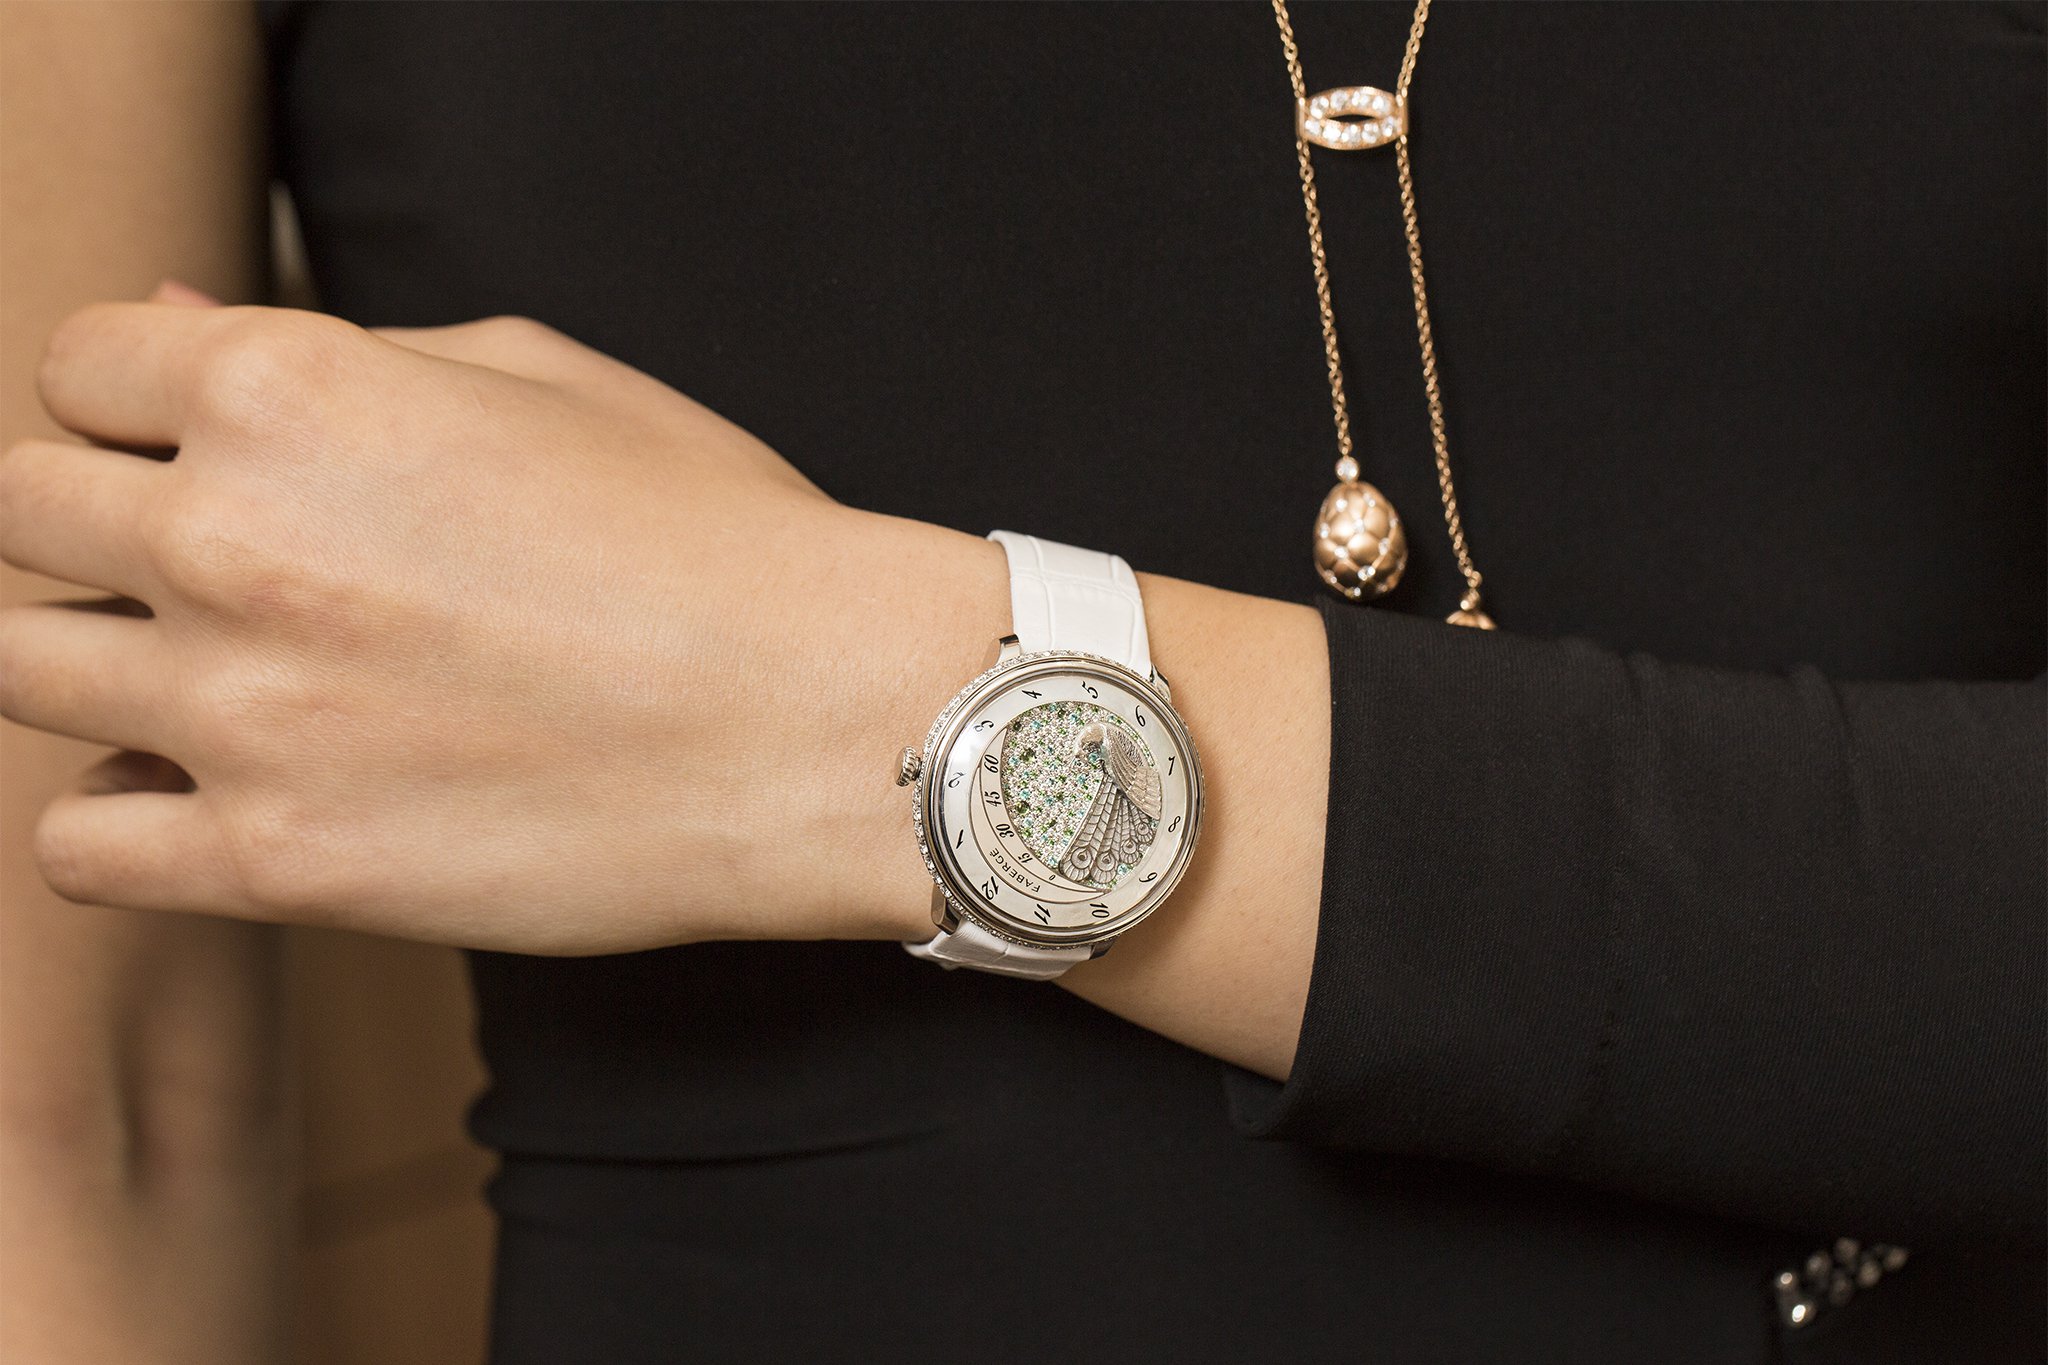 Fabergé Lady Compliquée Peacock Watch 2015 Wrist